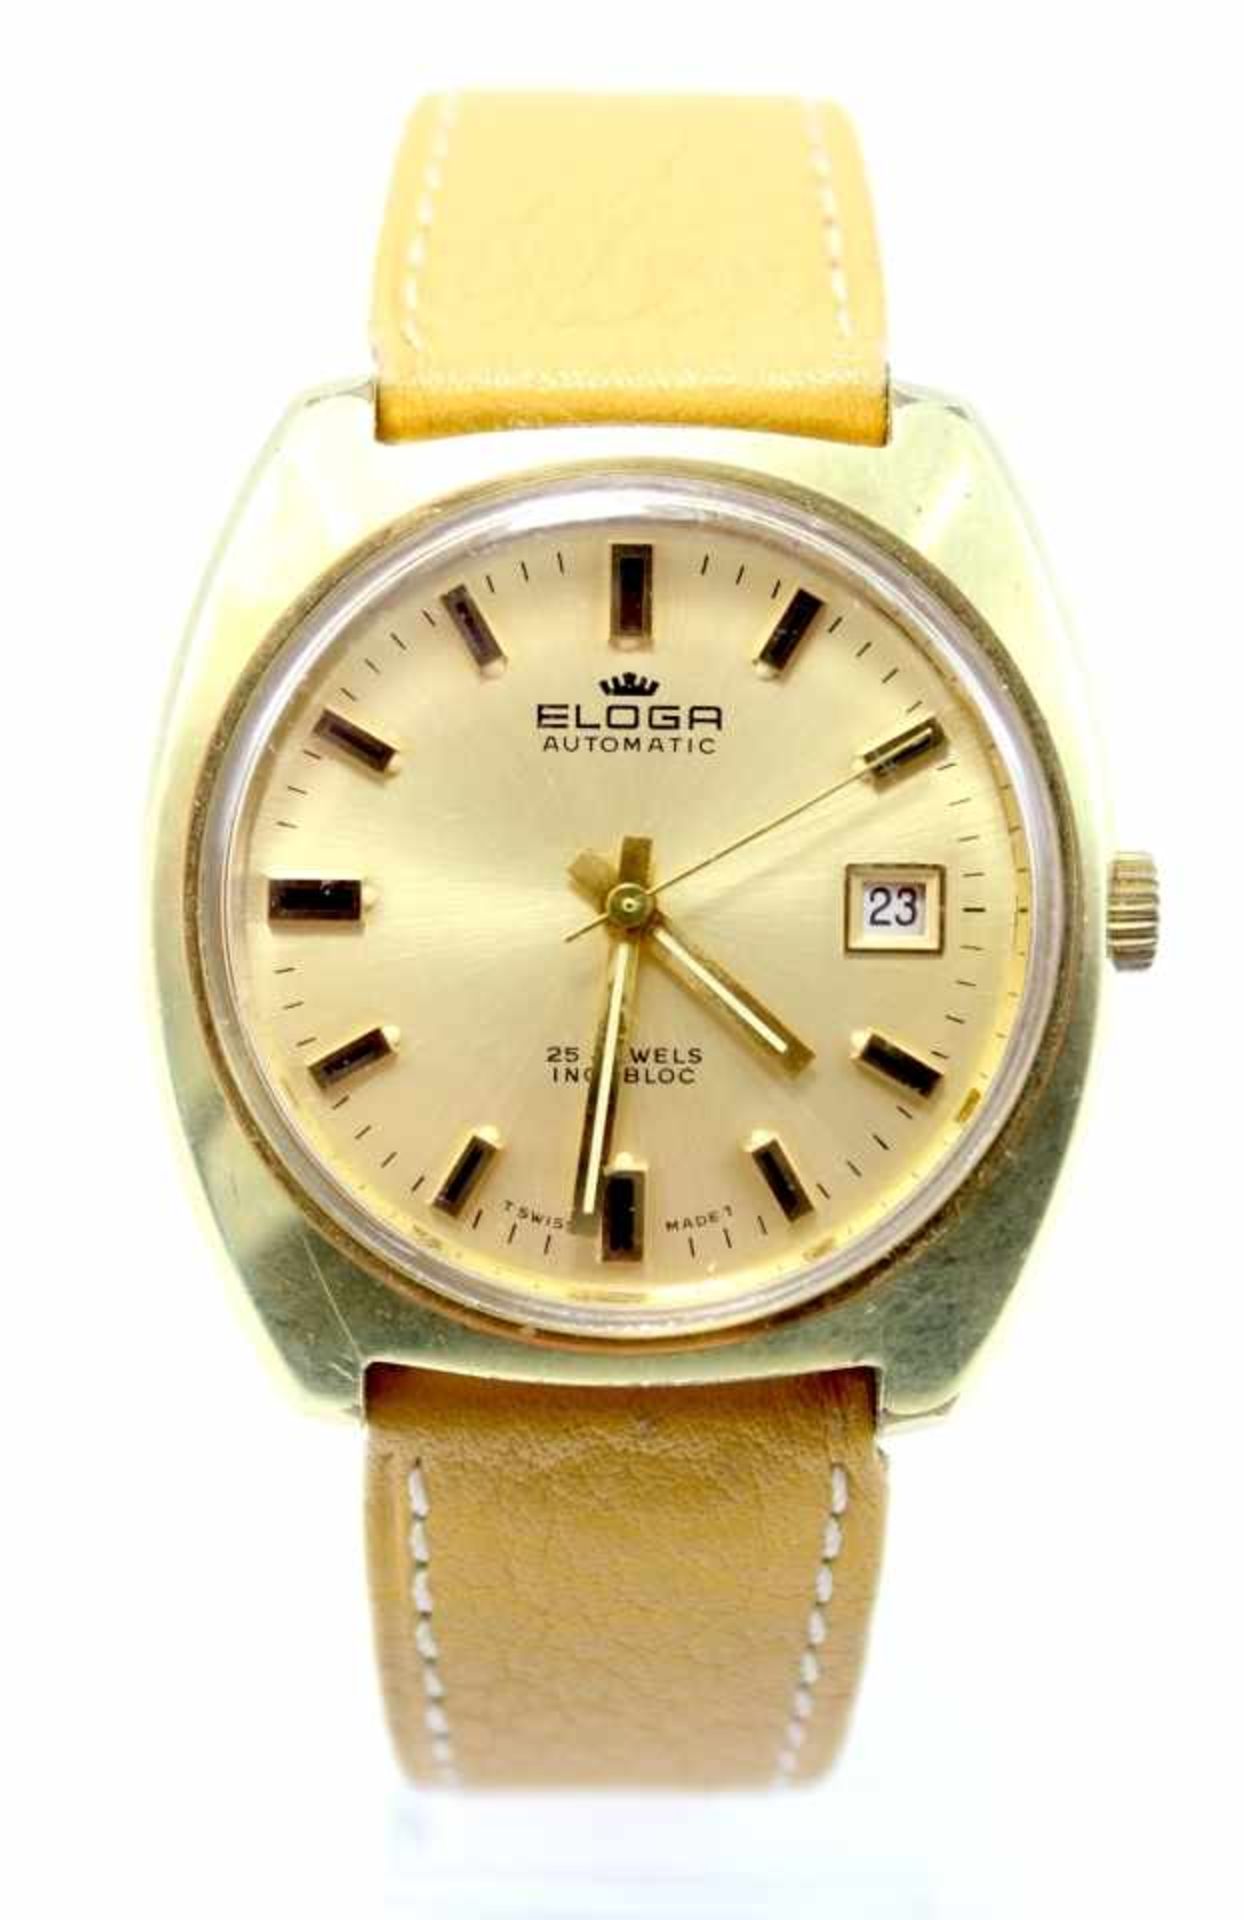 Armbanduhr - Marke Eloga Automatic 25 Jewels Incabloc, Stahlgehäuse No. 6290, goldfarbenes